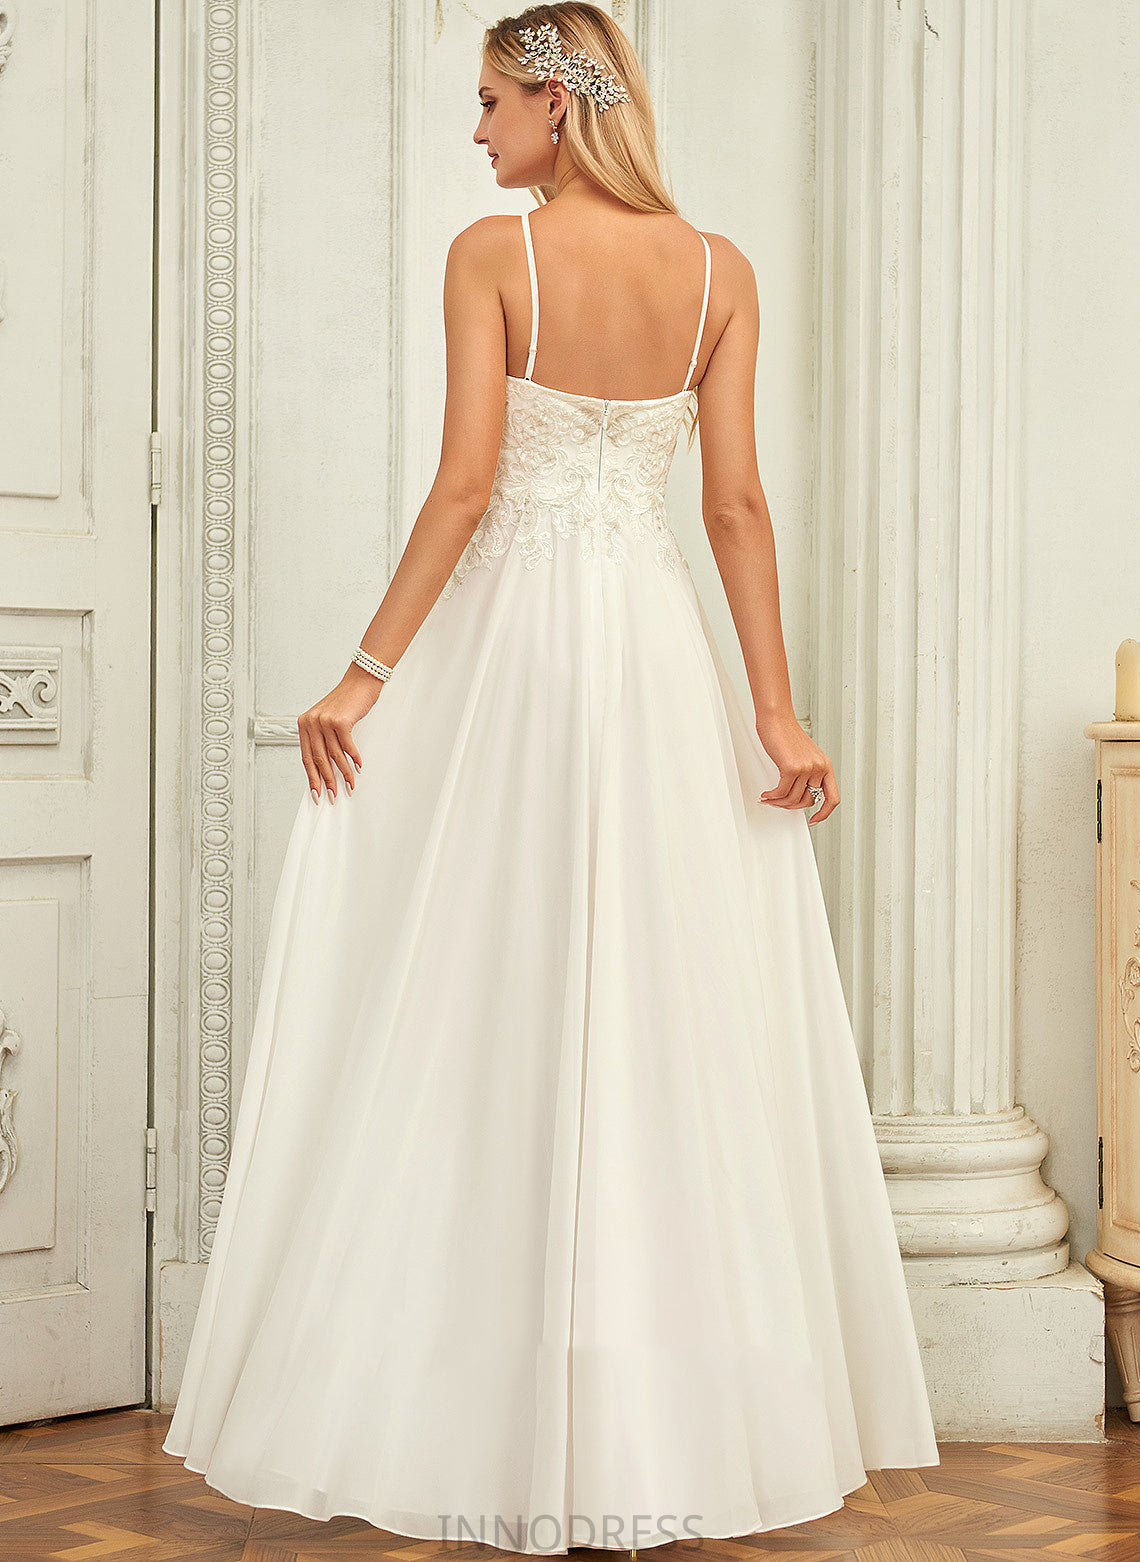 Lace Chasity Chiffon Wedding Dresses Scoop Wedding A-Line Dress Floor-Length